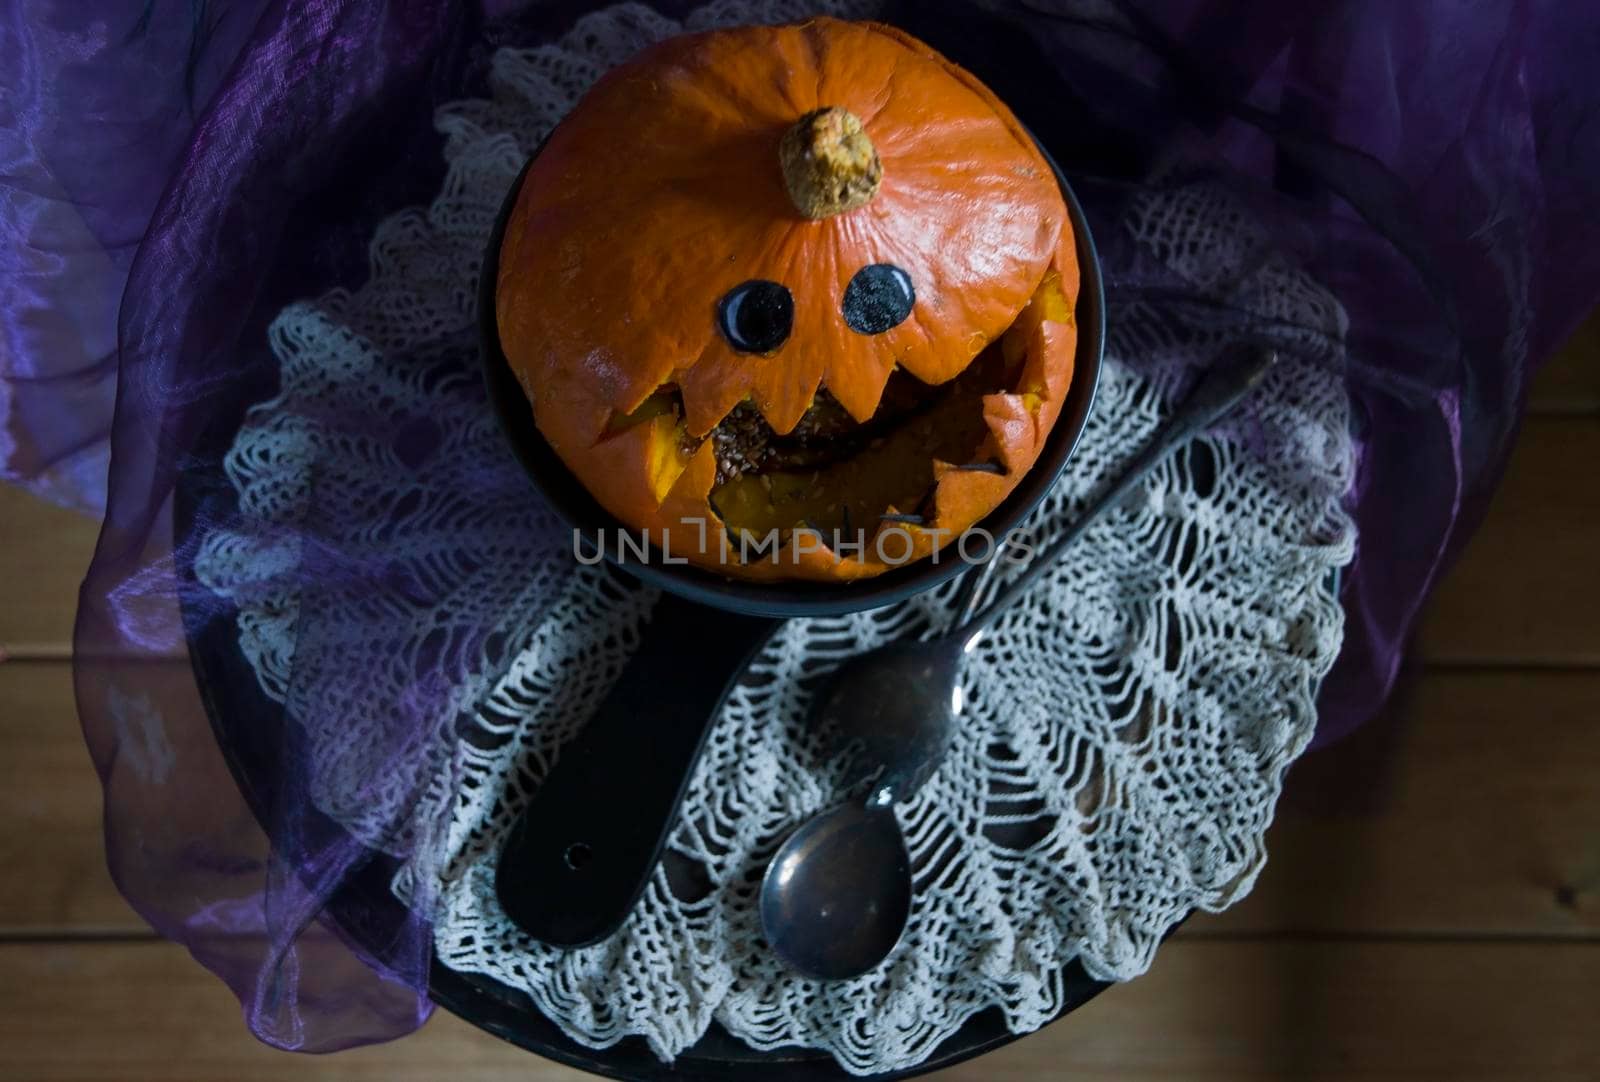 Halloween Pumpkin head, pumpkin with teeth and eyes, selective focus, vertical photo in a dark key. High quality photo